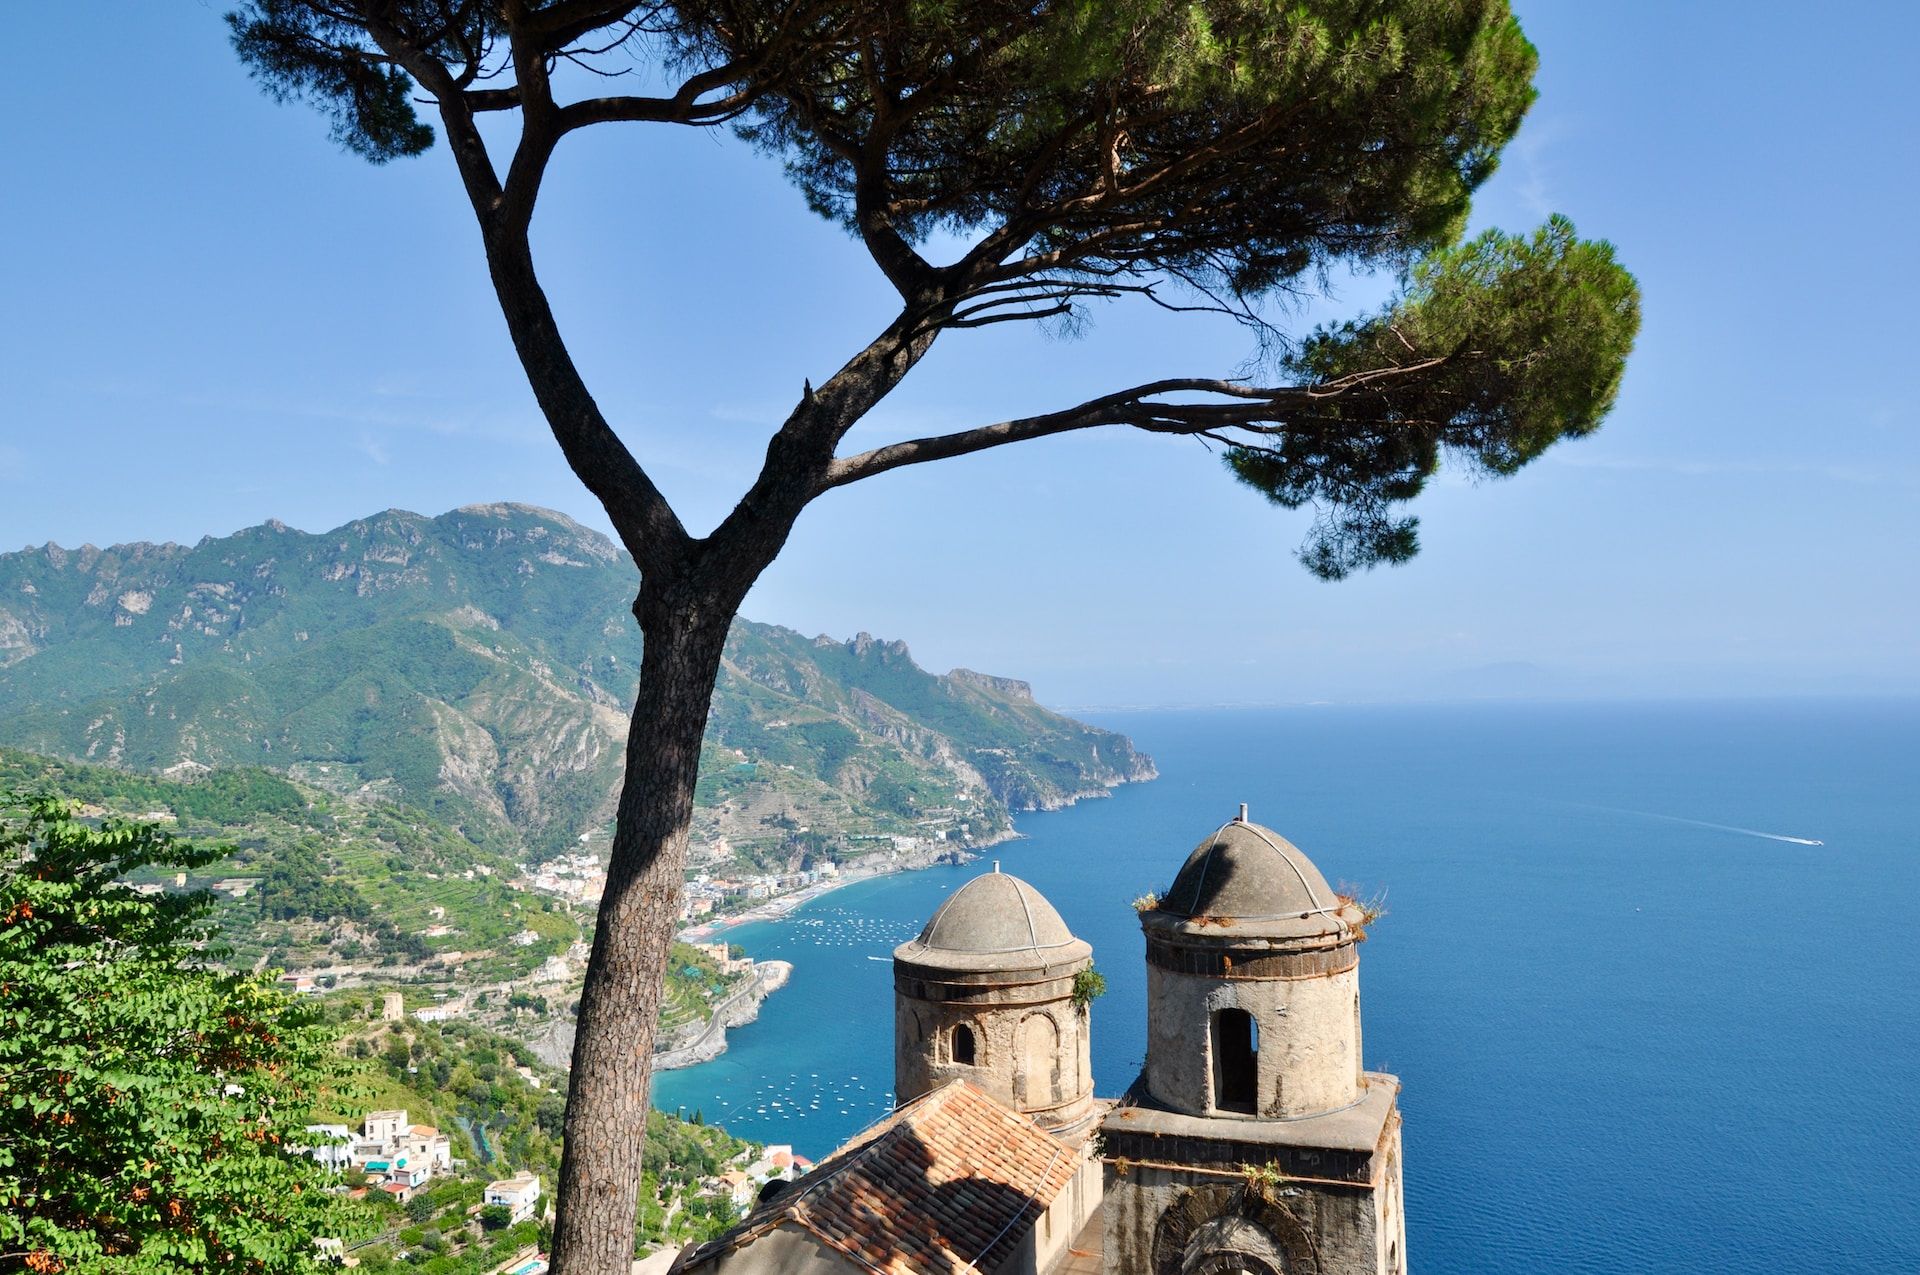 Beautiful tree in front of the Amalfi Coastline